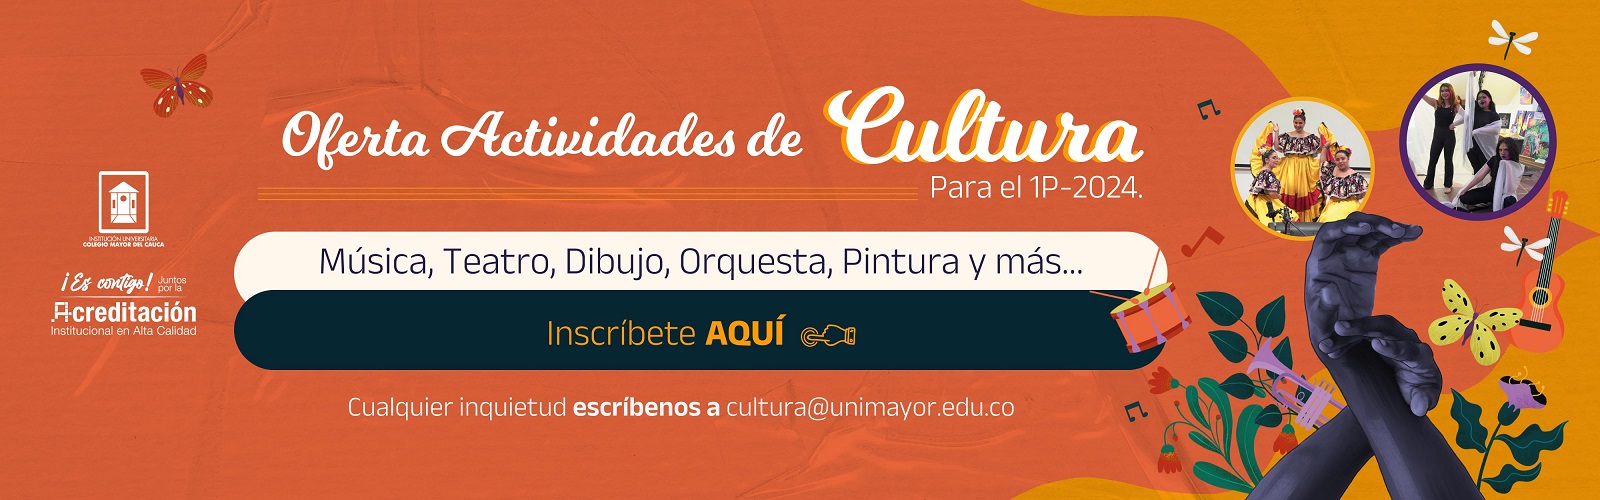 Banner_Actividades_de_Cultura